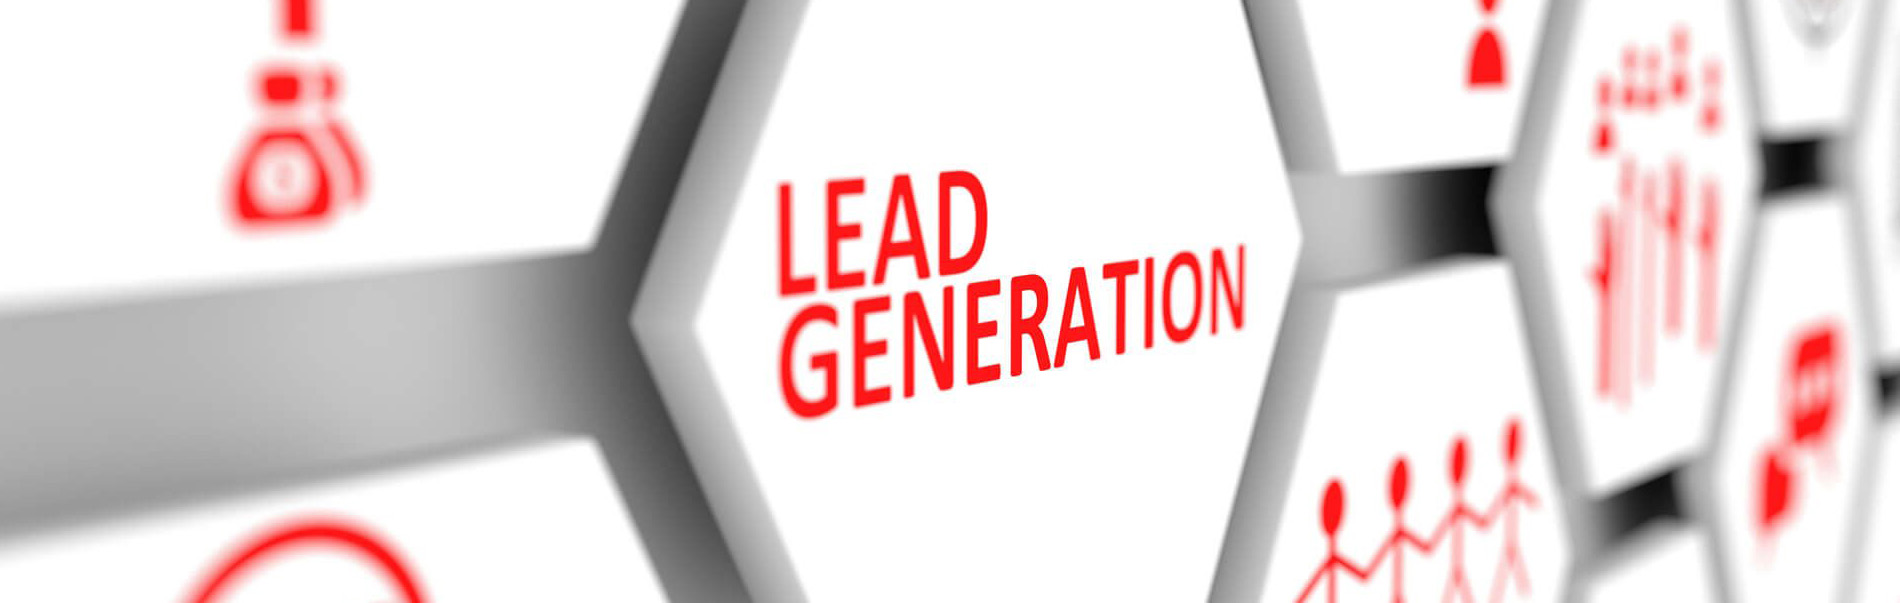 Lead Generation/Web Research